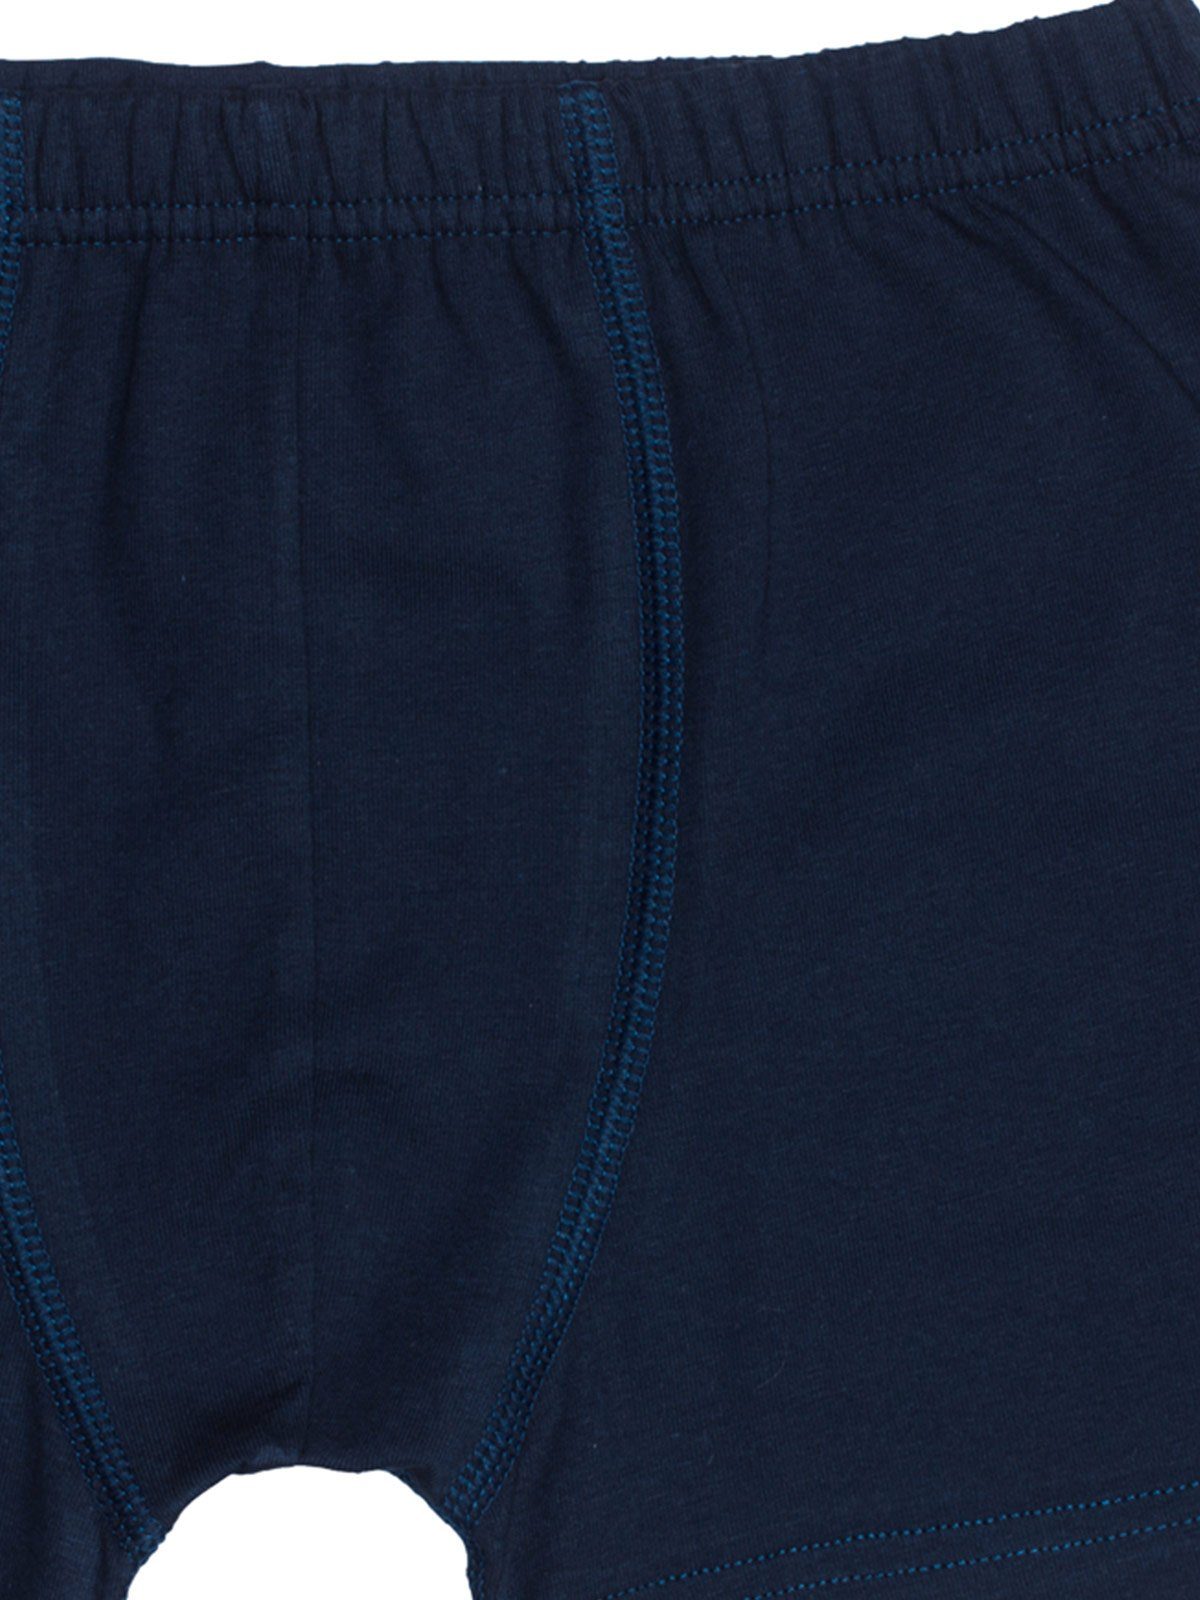 Sweety hohe Boxershorts for Sparpack Jersey Knaben Retro Markenqualität Kids Single 6er 6-St) Shorts (Spar-Set, navy